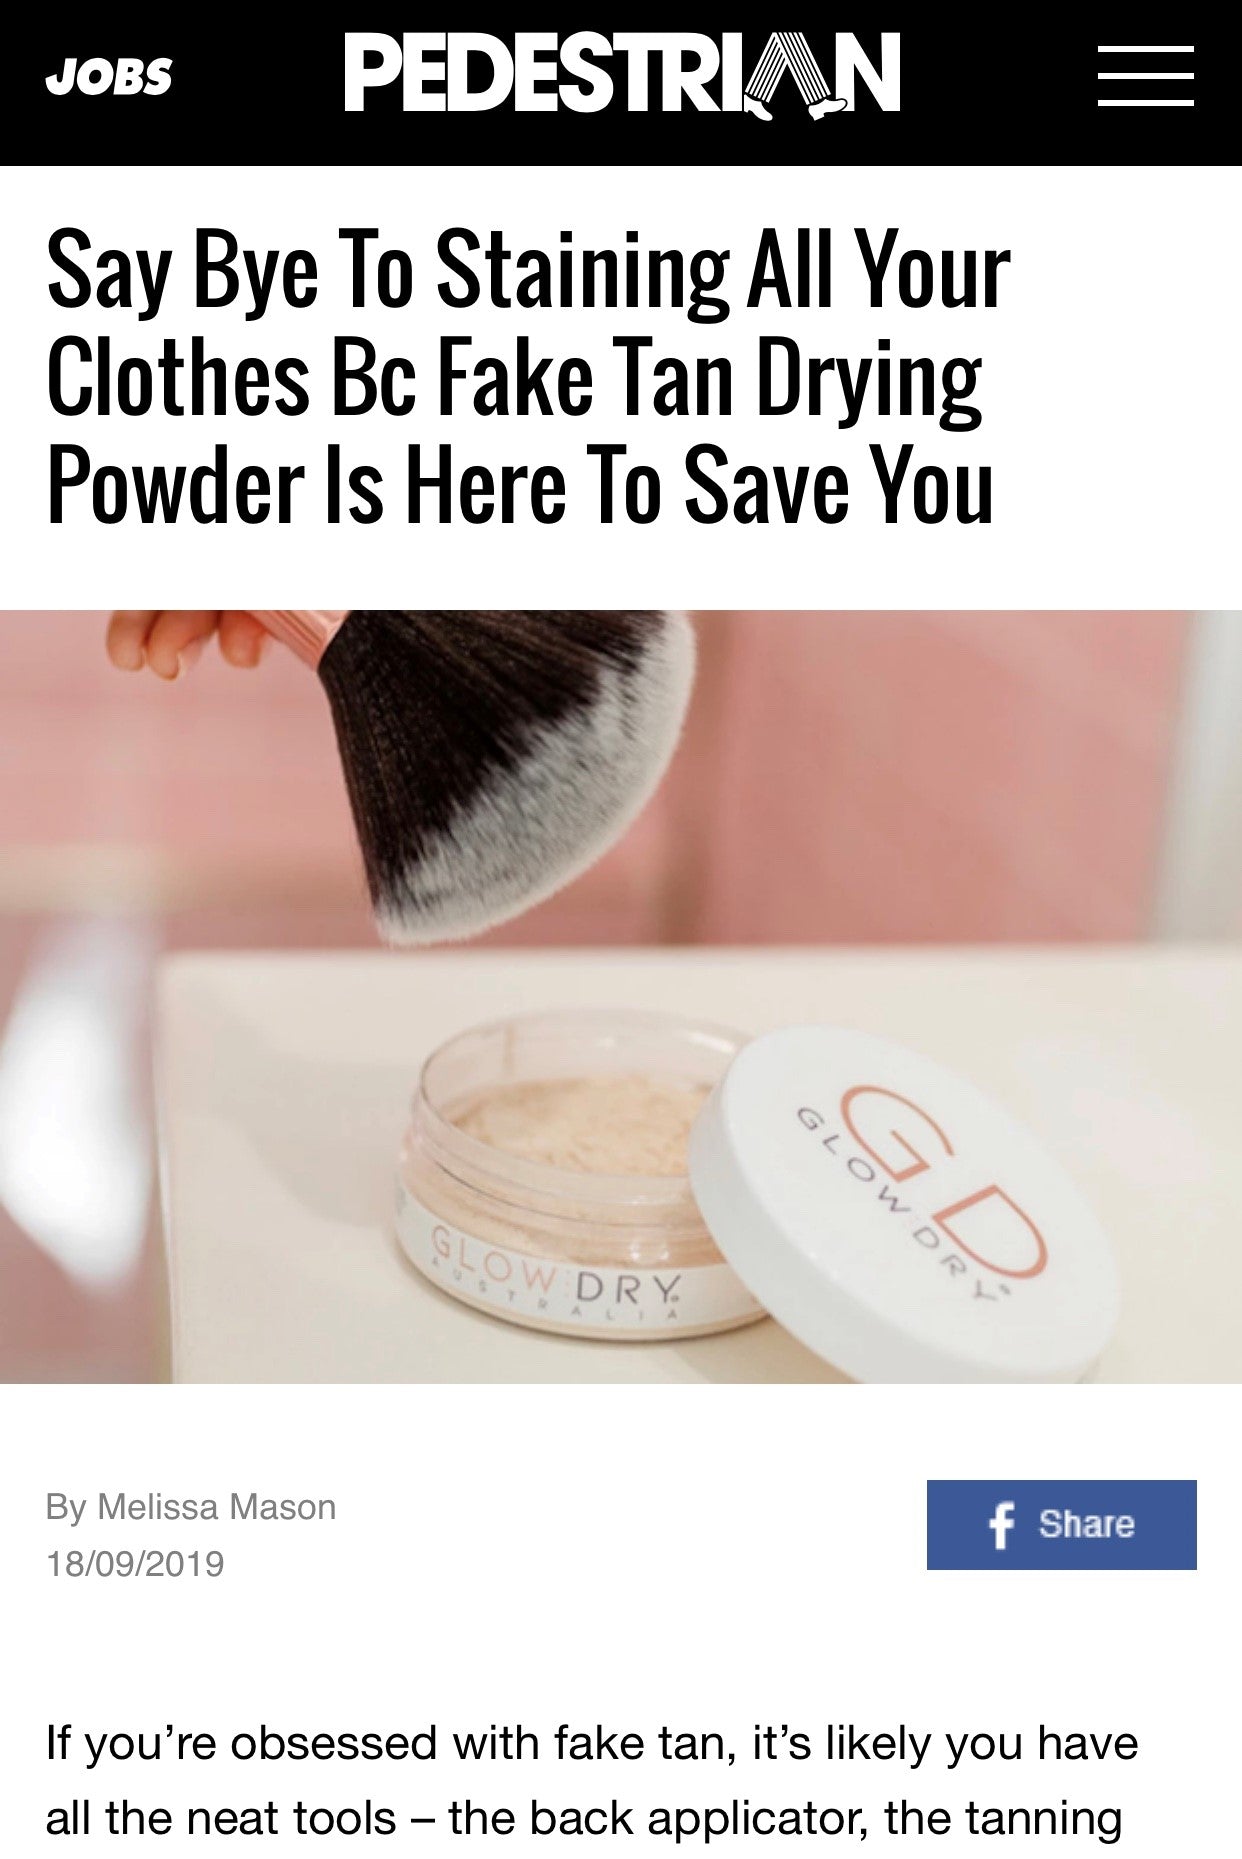 Fake tan drying powder review | Pedestrian TV article, September 2019